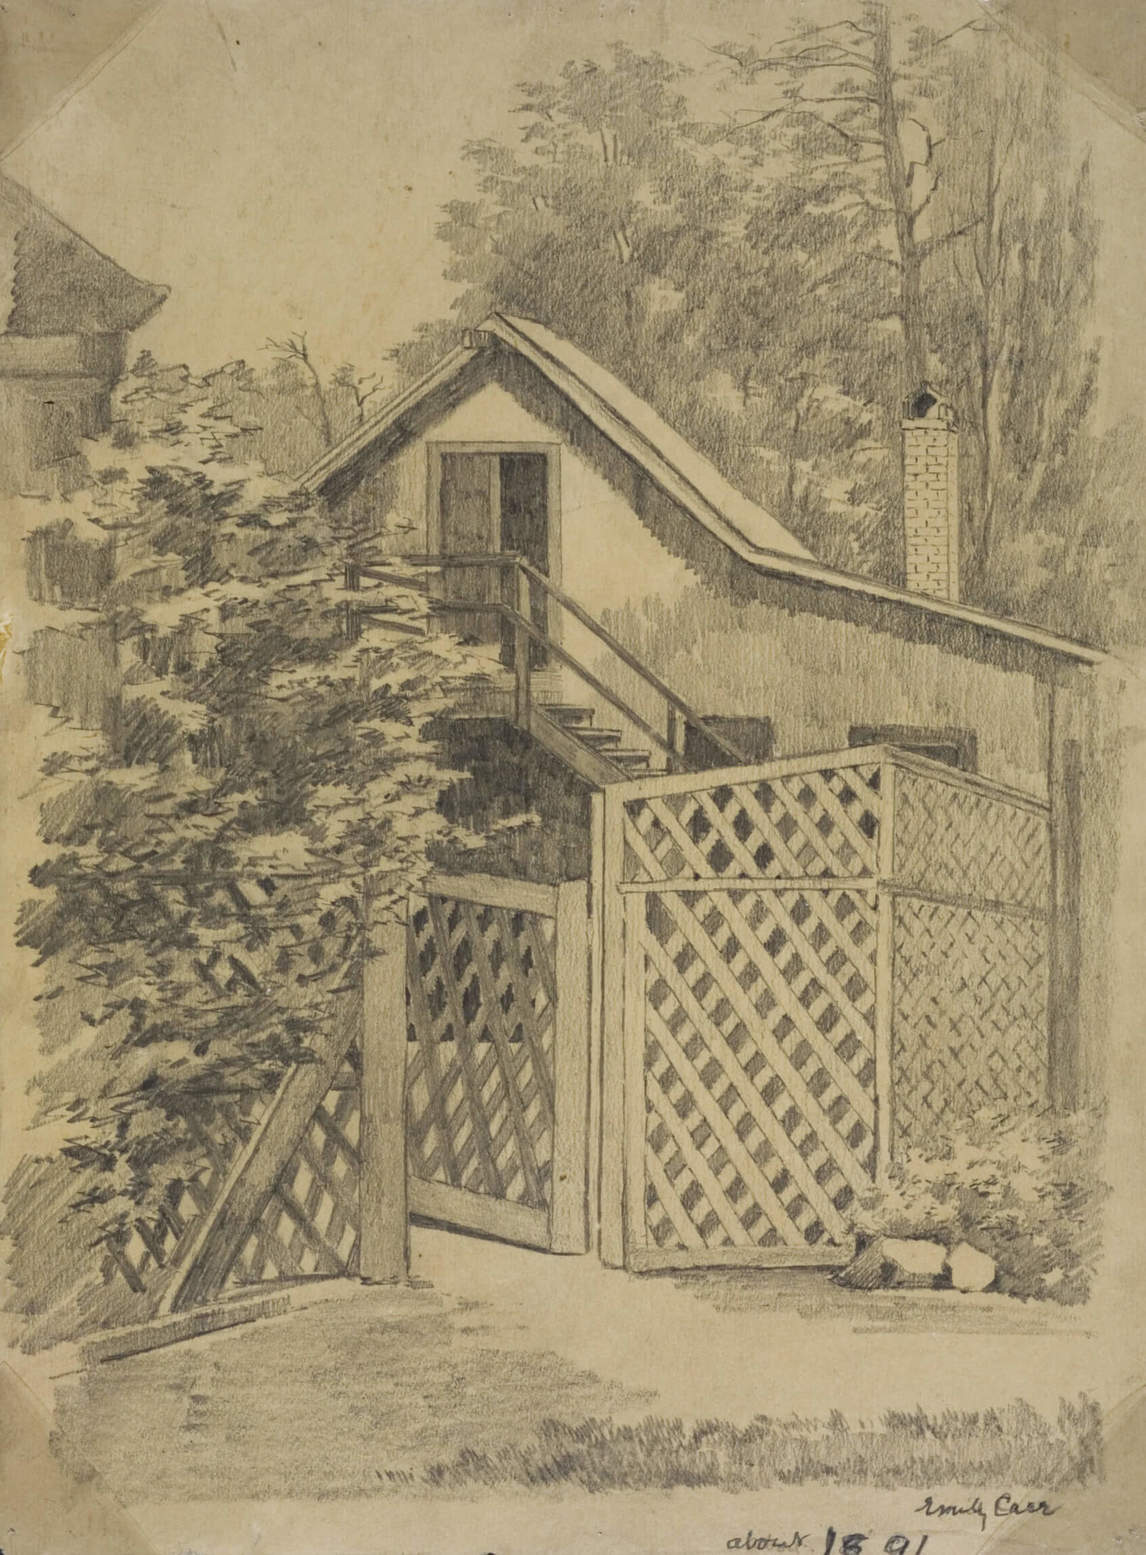 Art Canada Institute, Emily Carr, Emily’s Old Barn Studio, c. 1891